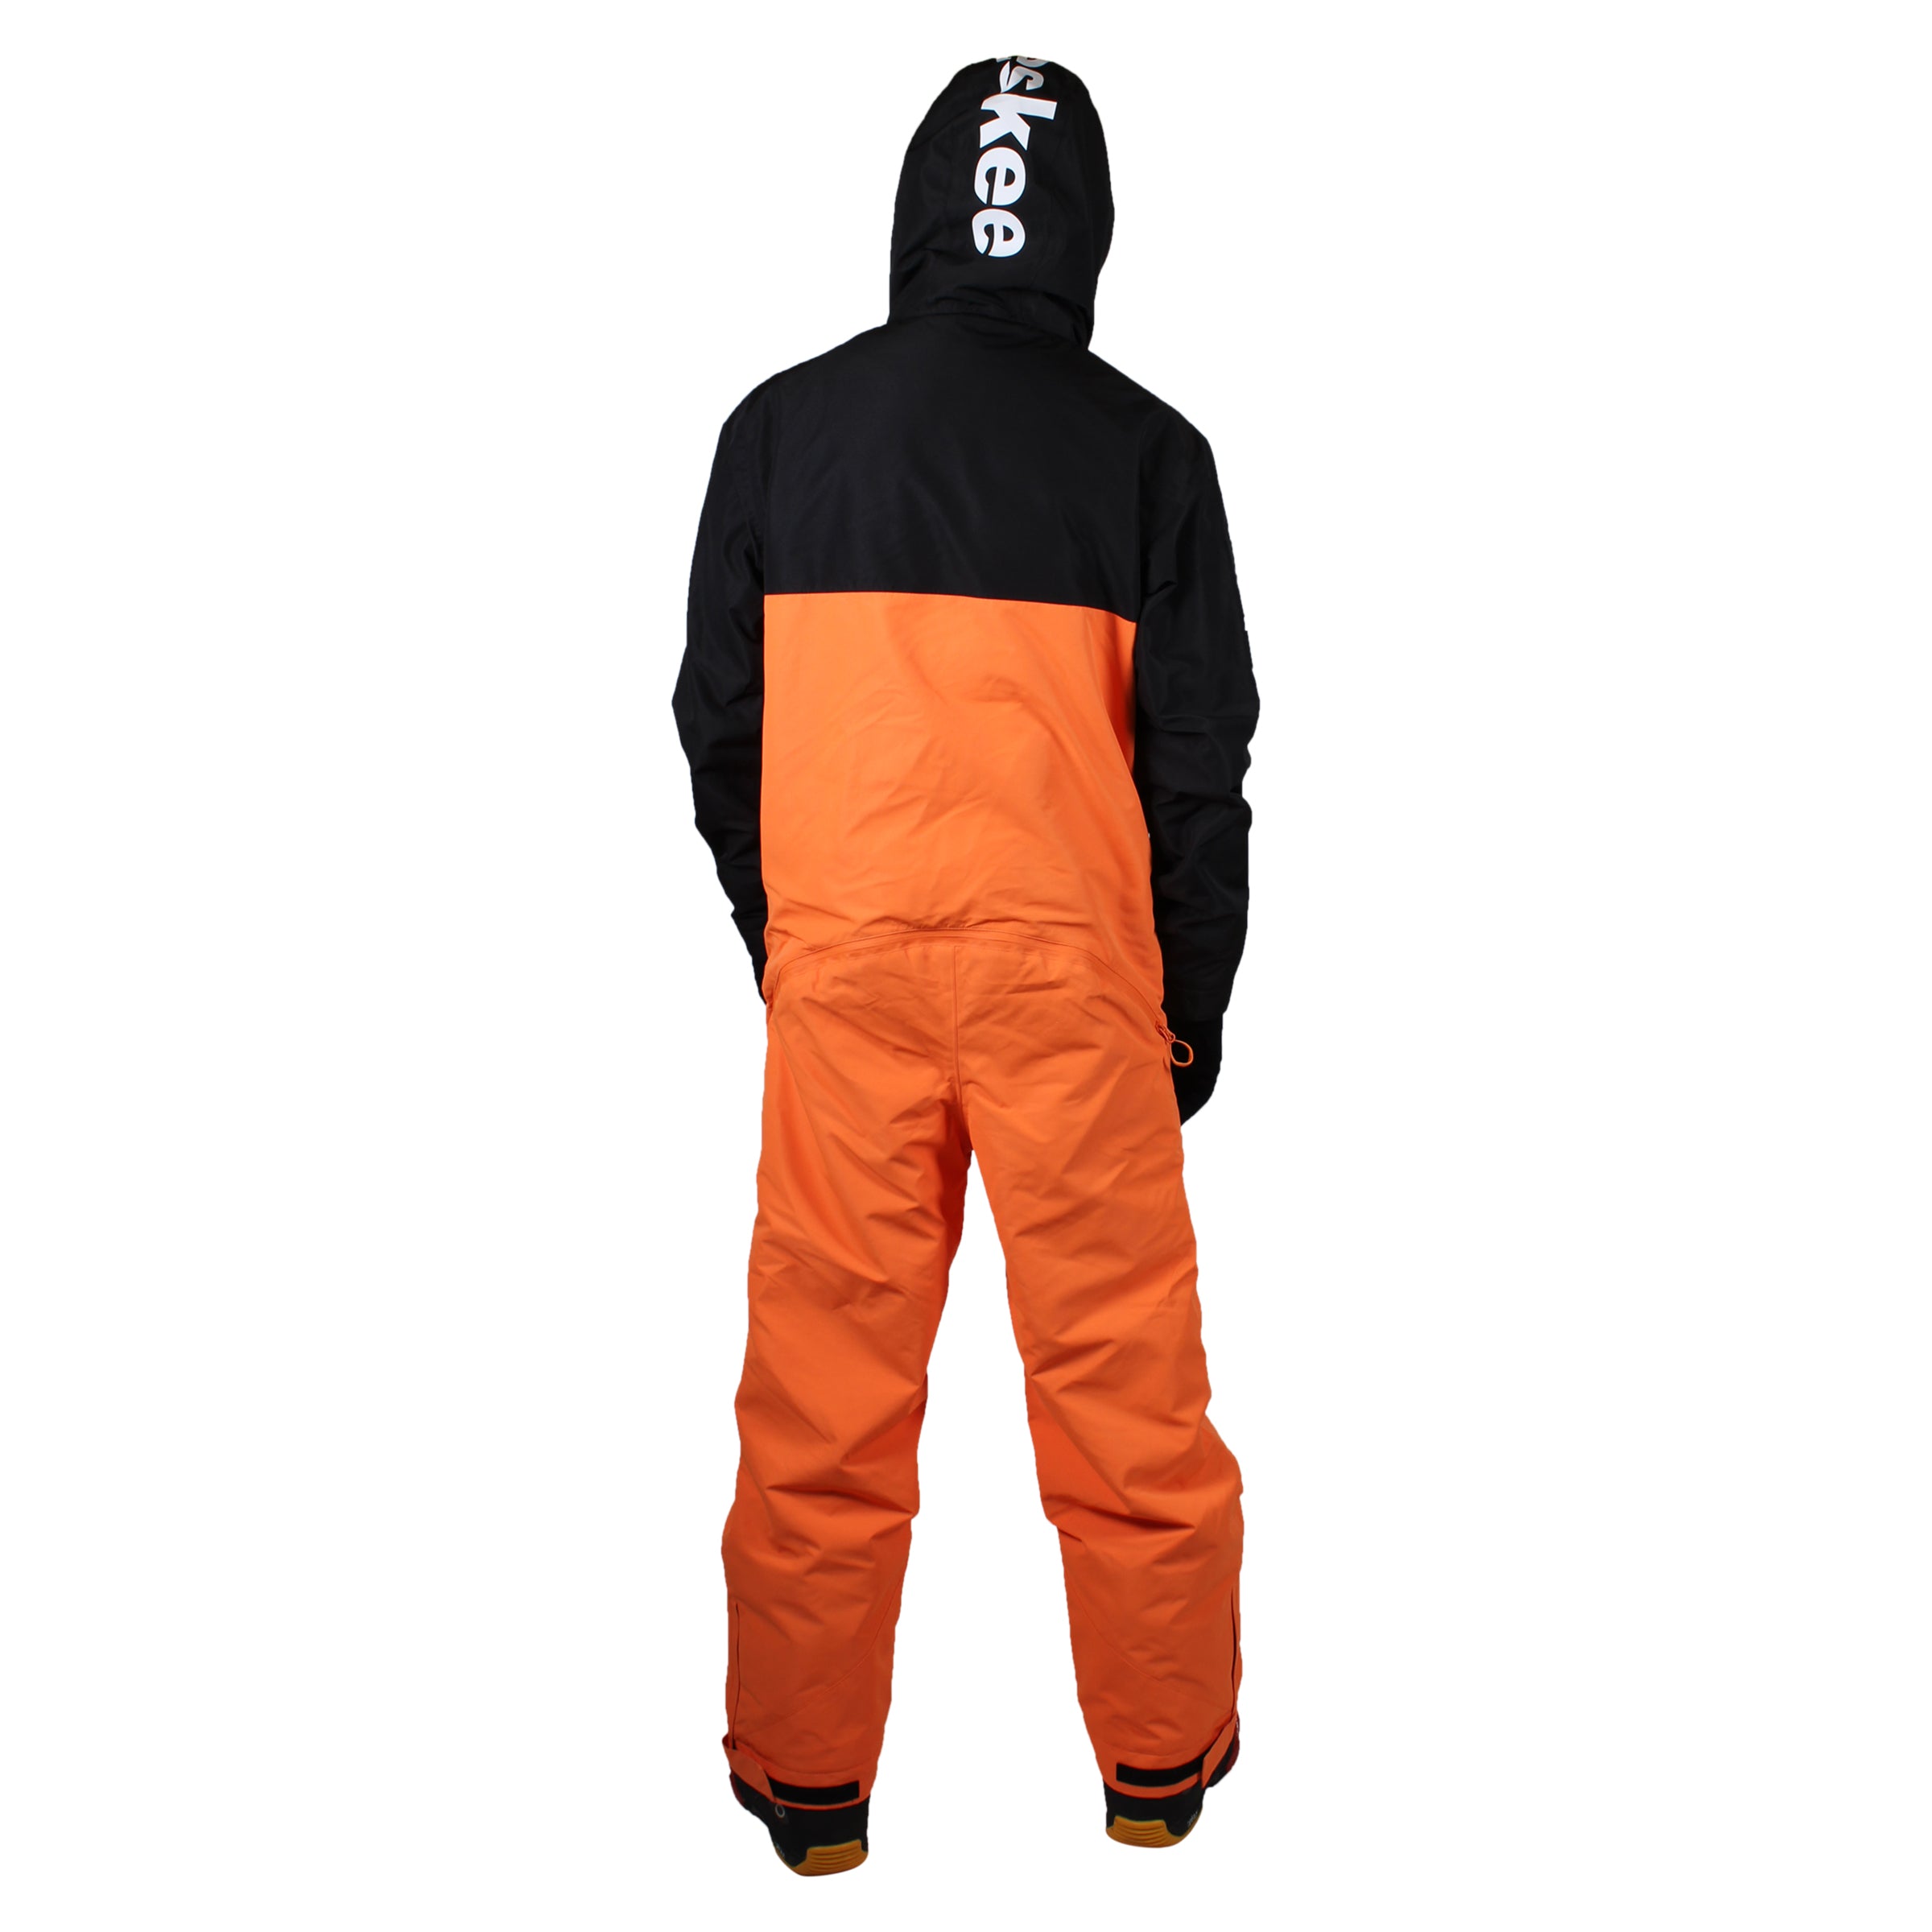 Men's Snow Suit, Orange & Black (Sample Sale)